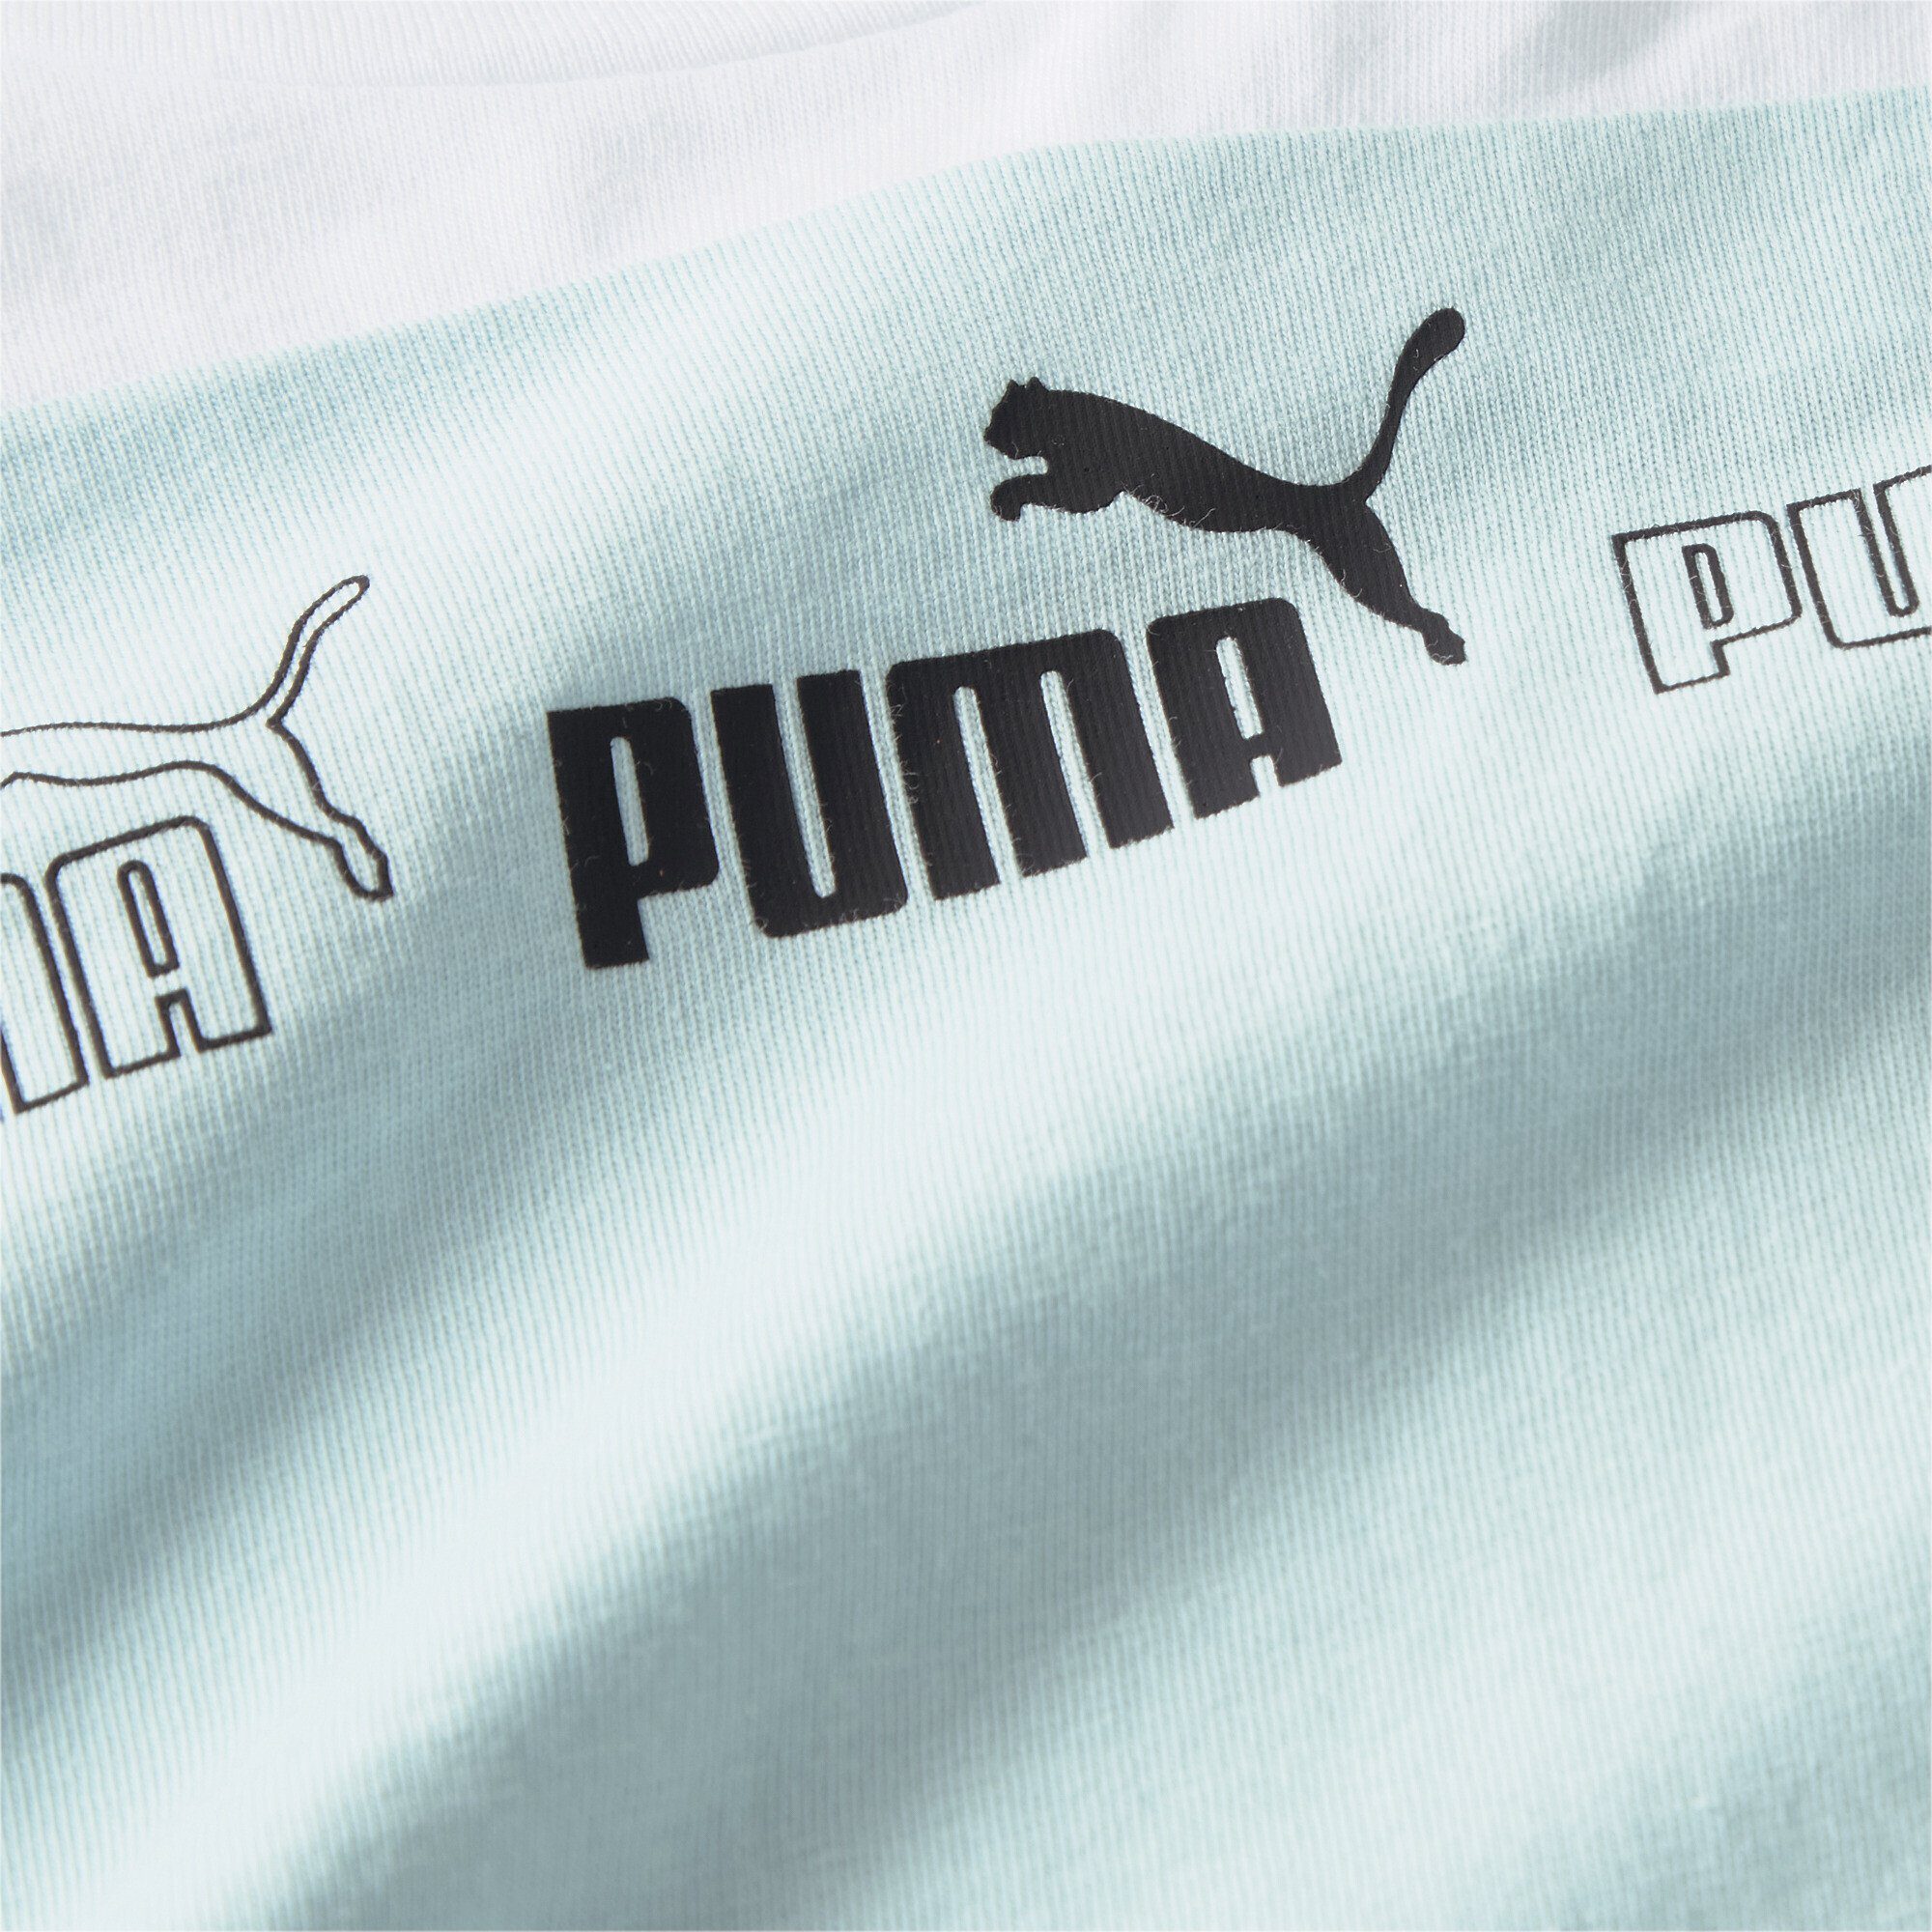 PUMA T-Shirt Around the Block Damen White Blue Light Aqua T-Shirt